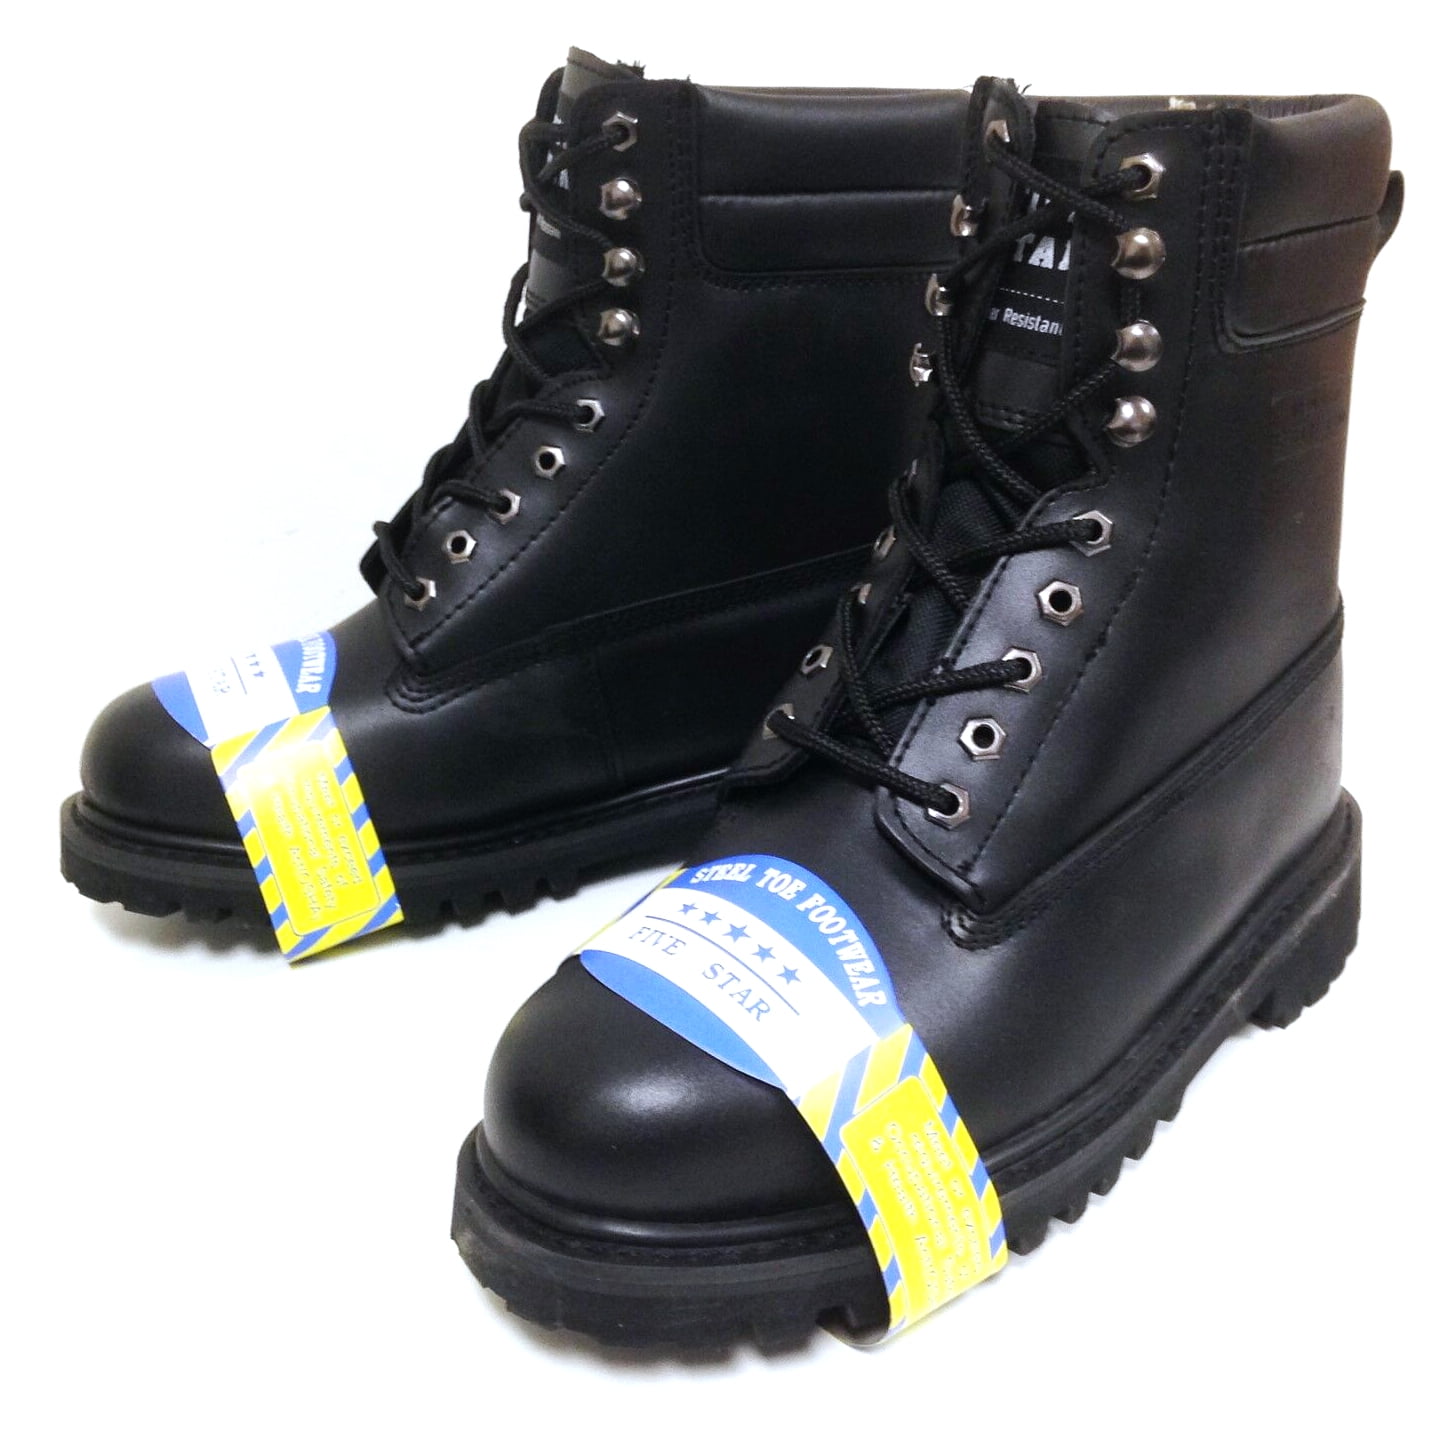 steel toe oil resistant work boots